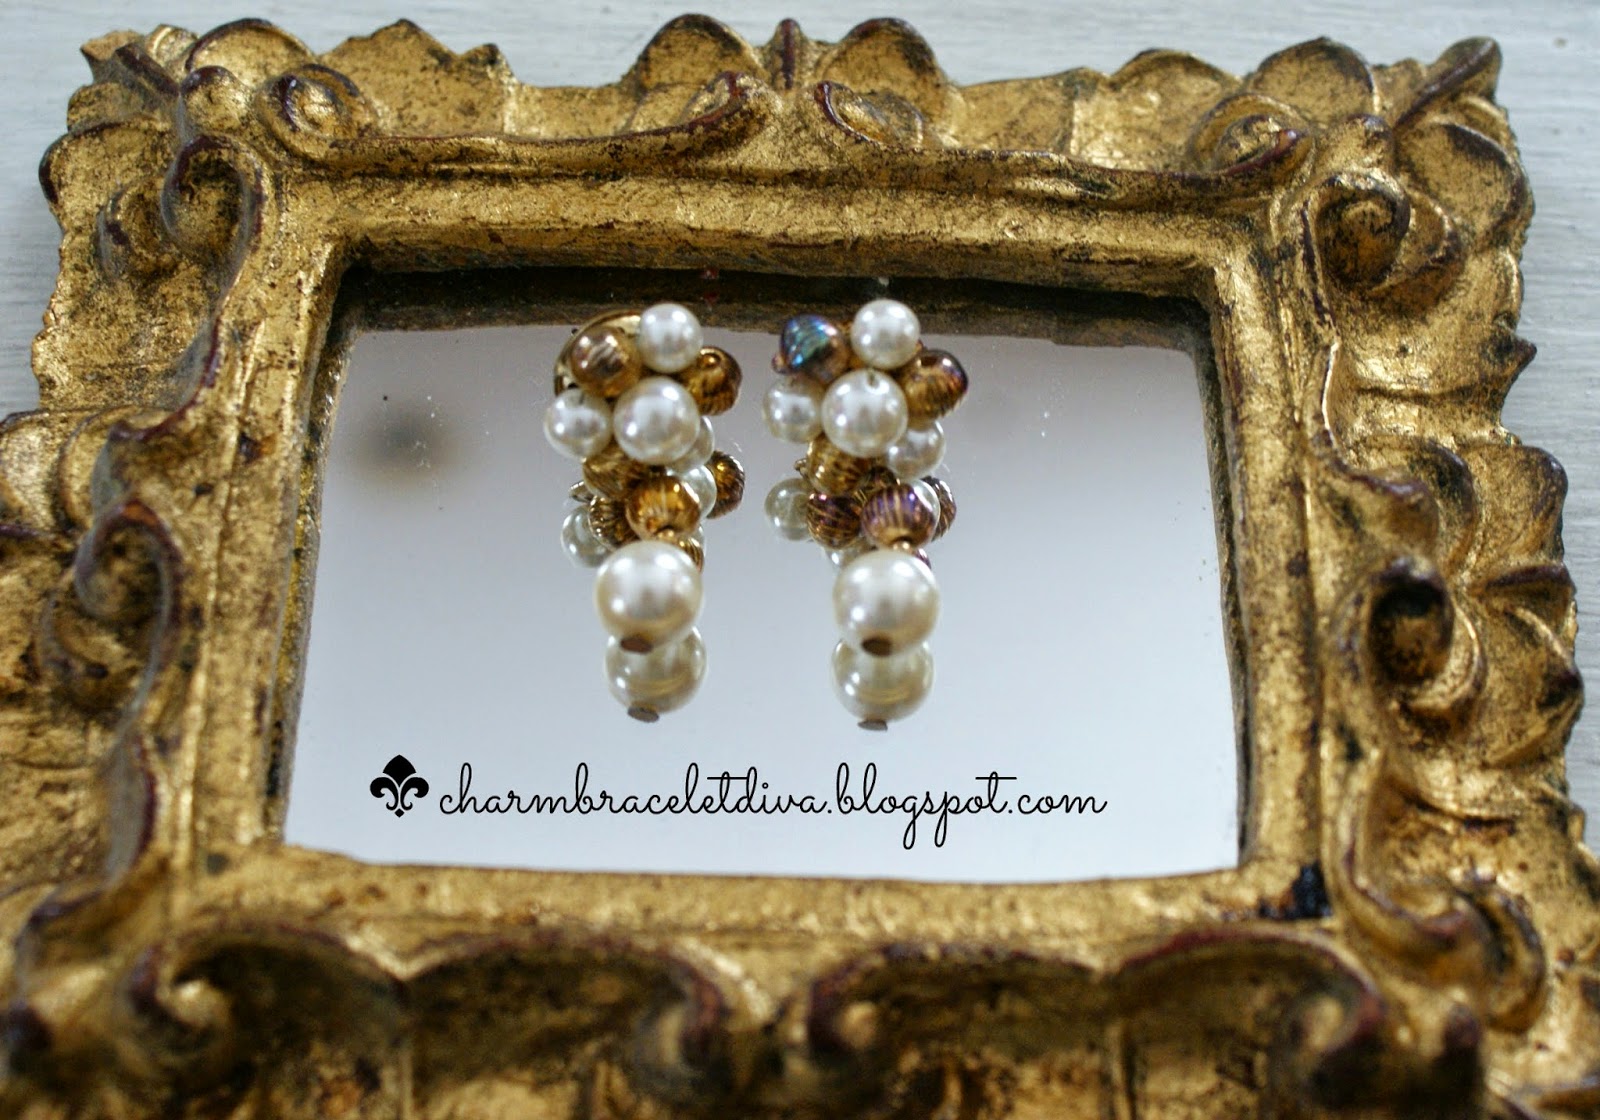 Vintage pearl and bead cluster drop earrings on mirror